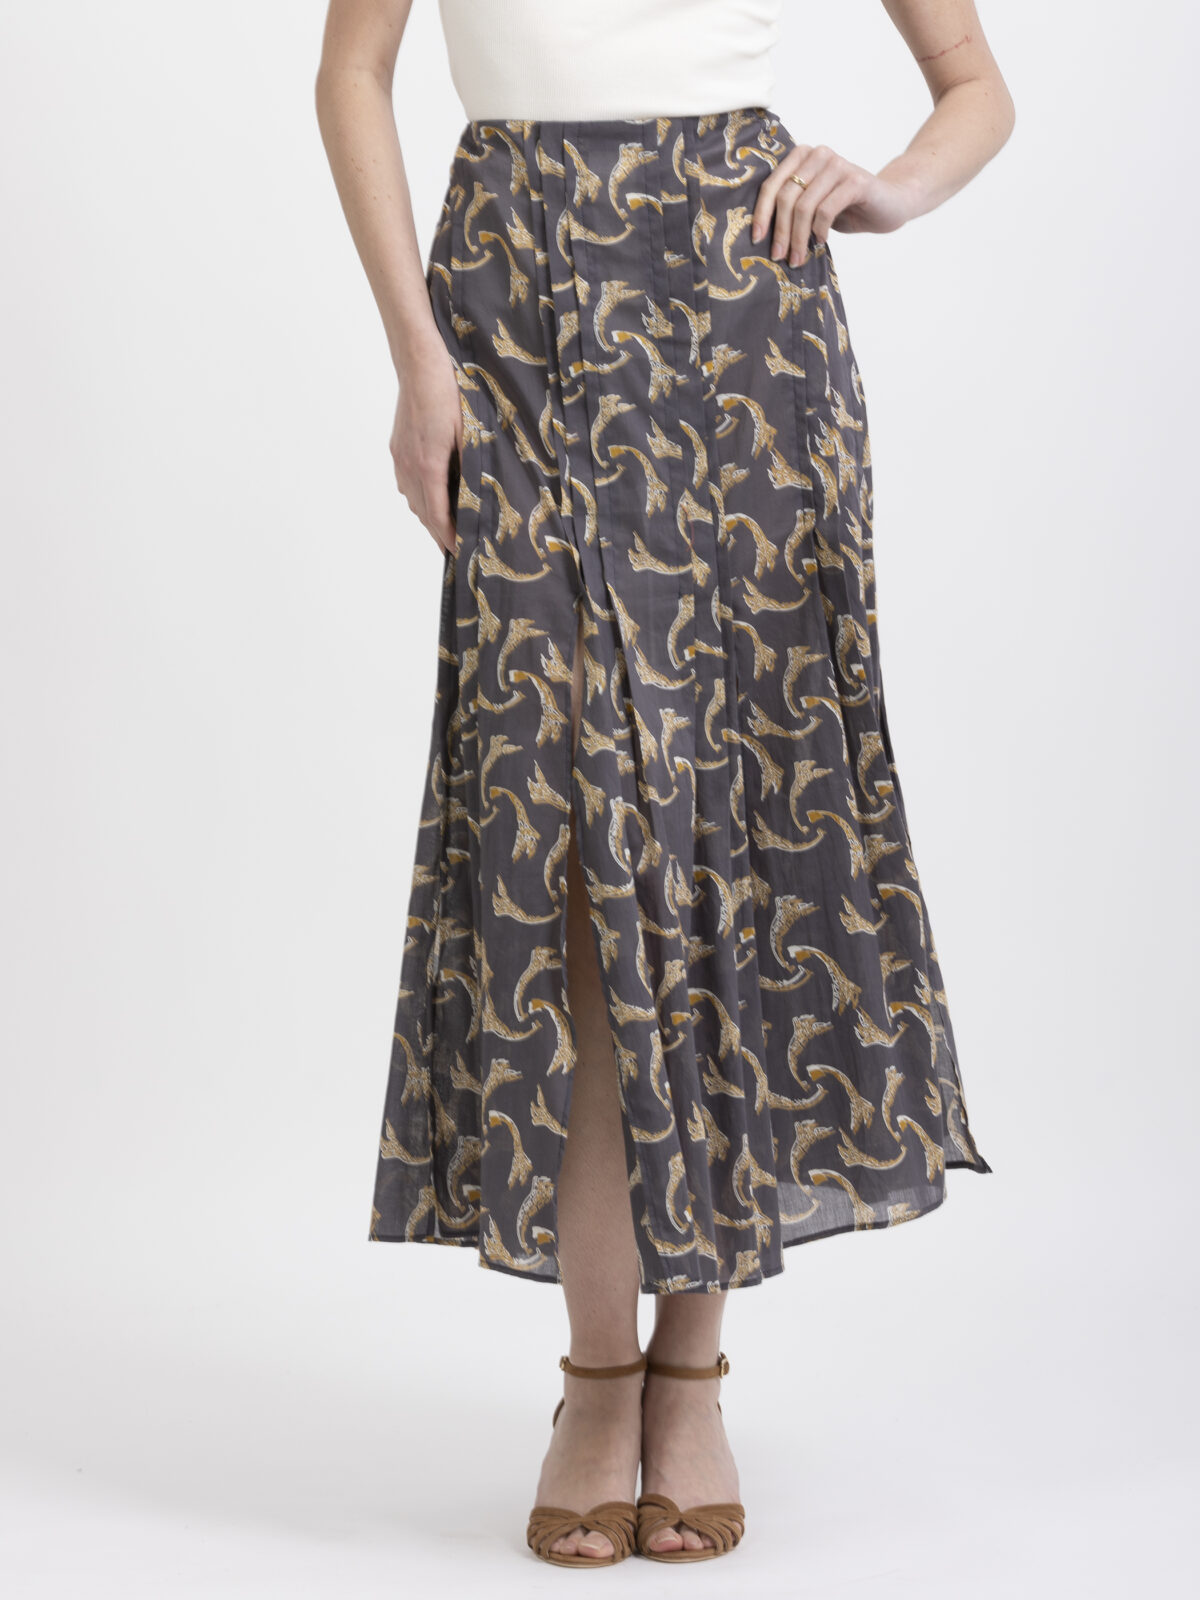 abel-skirt-voile-cotton-print-giraffes-maxi-greek-designers-kimale-matchboxathens